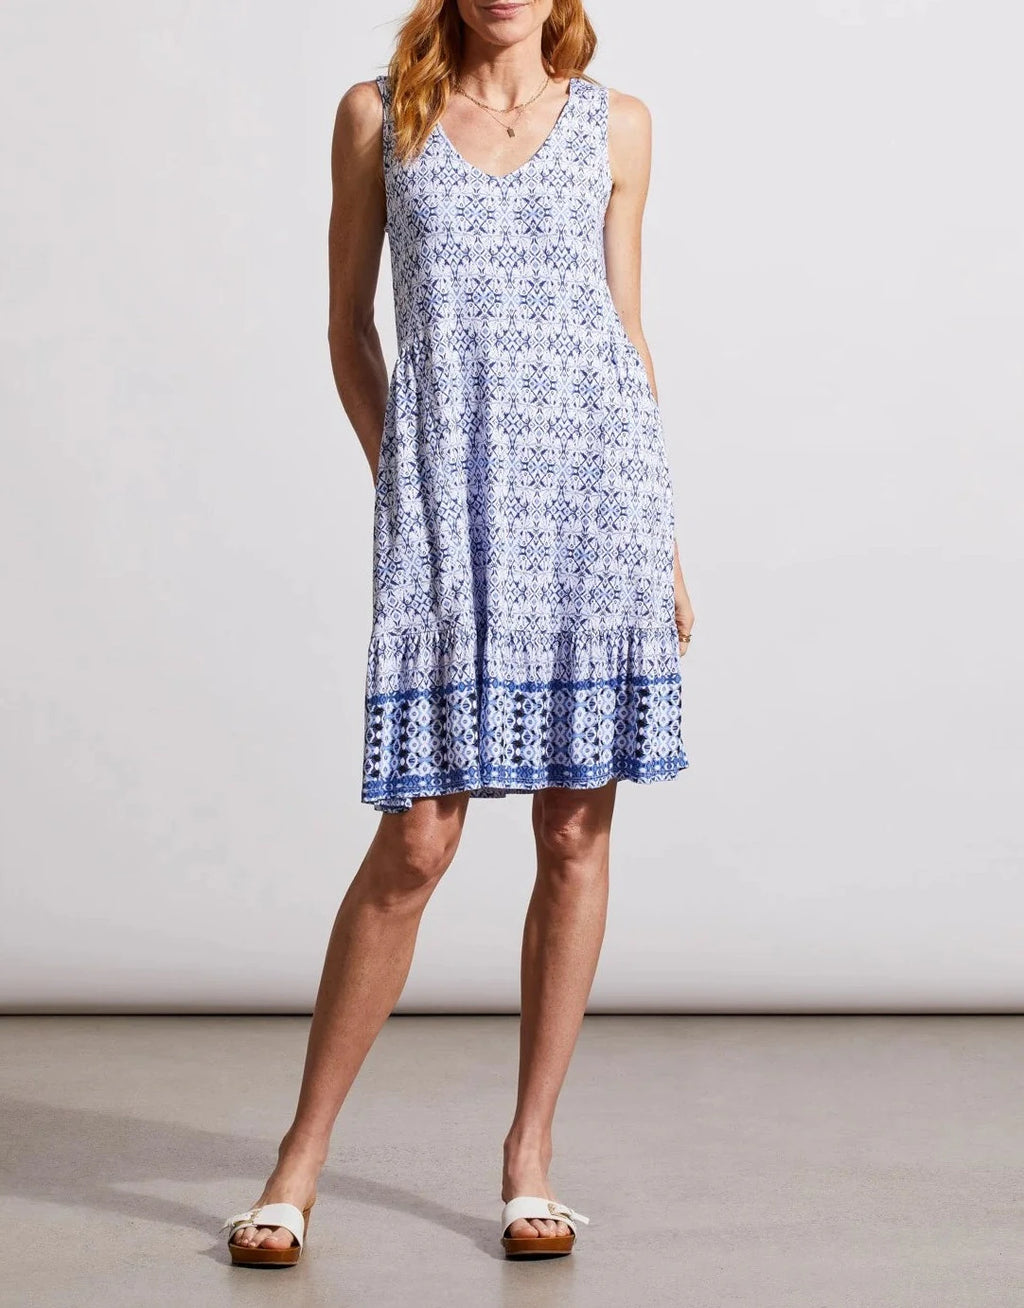 Printed Sleeveless Dress | Blue Star